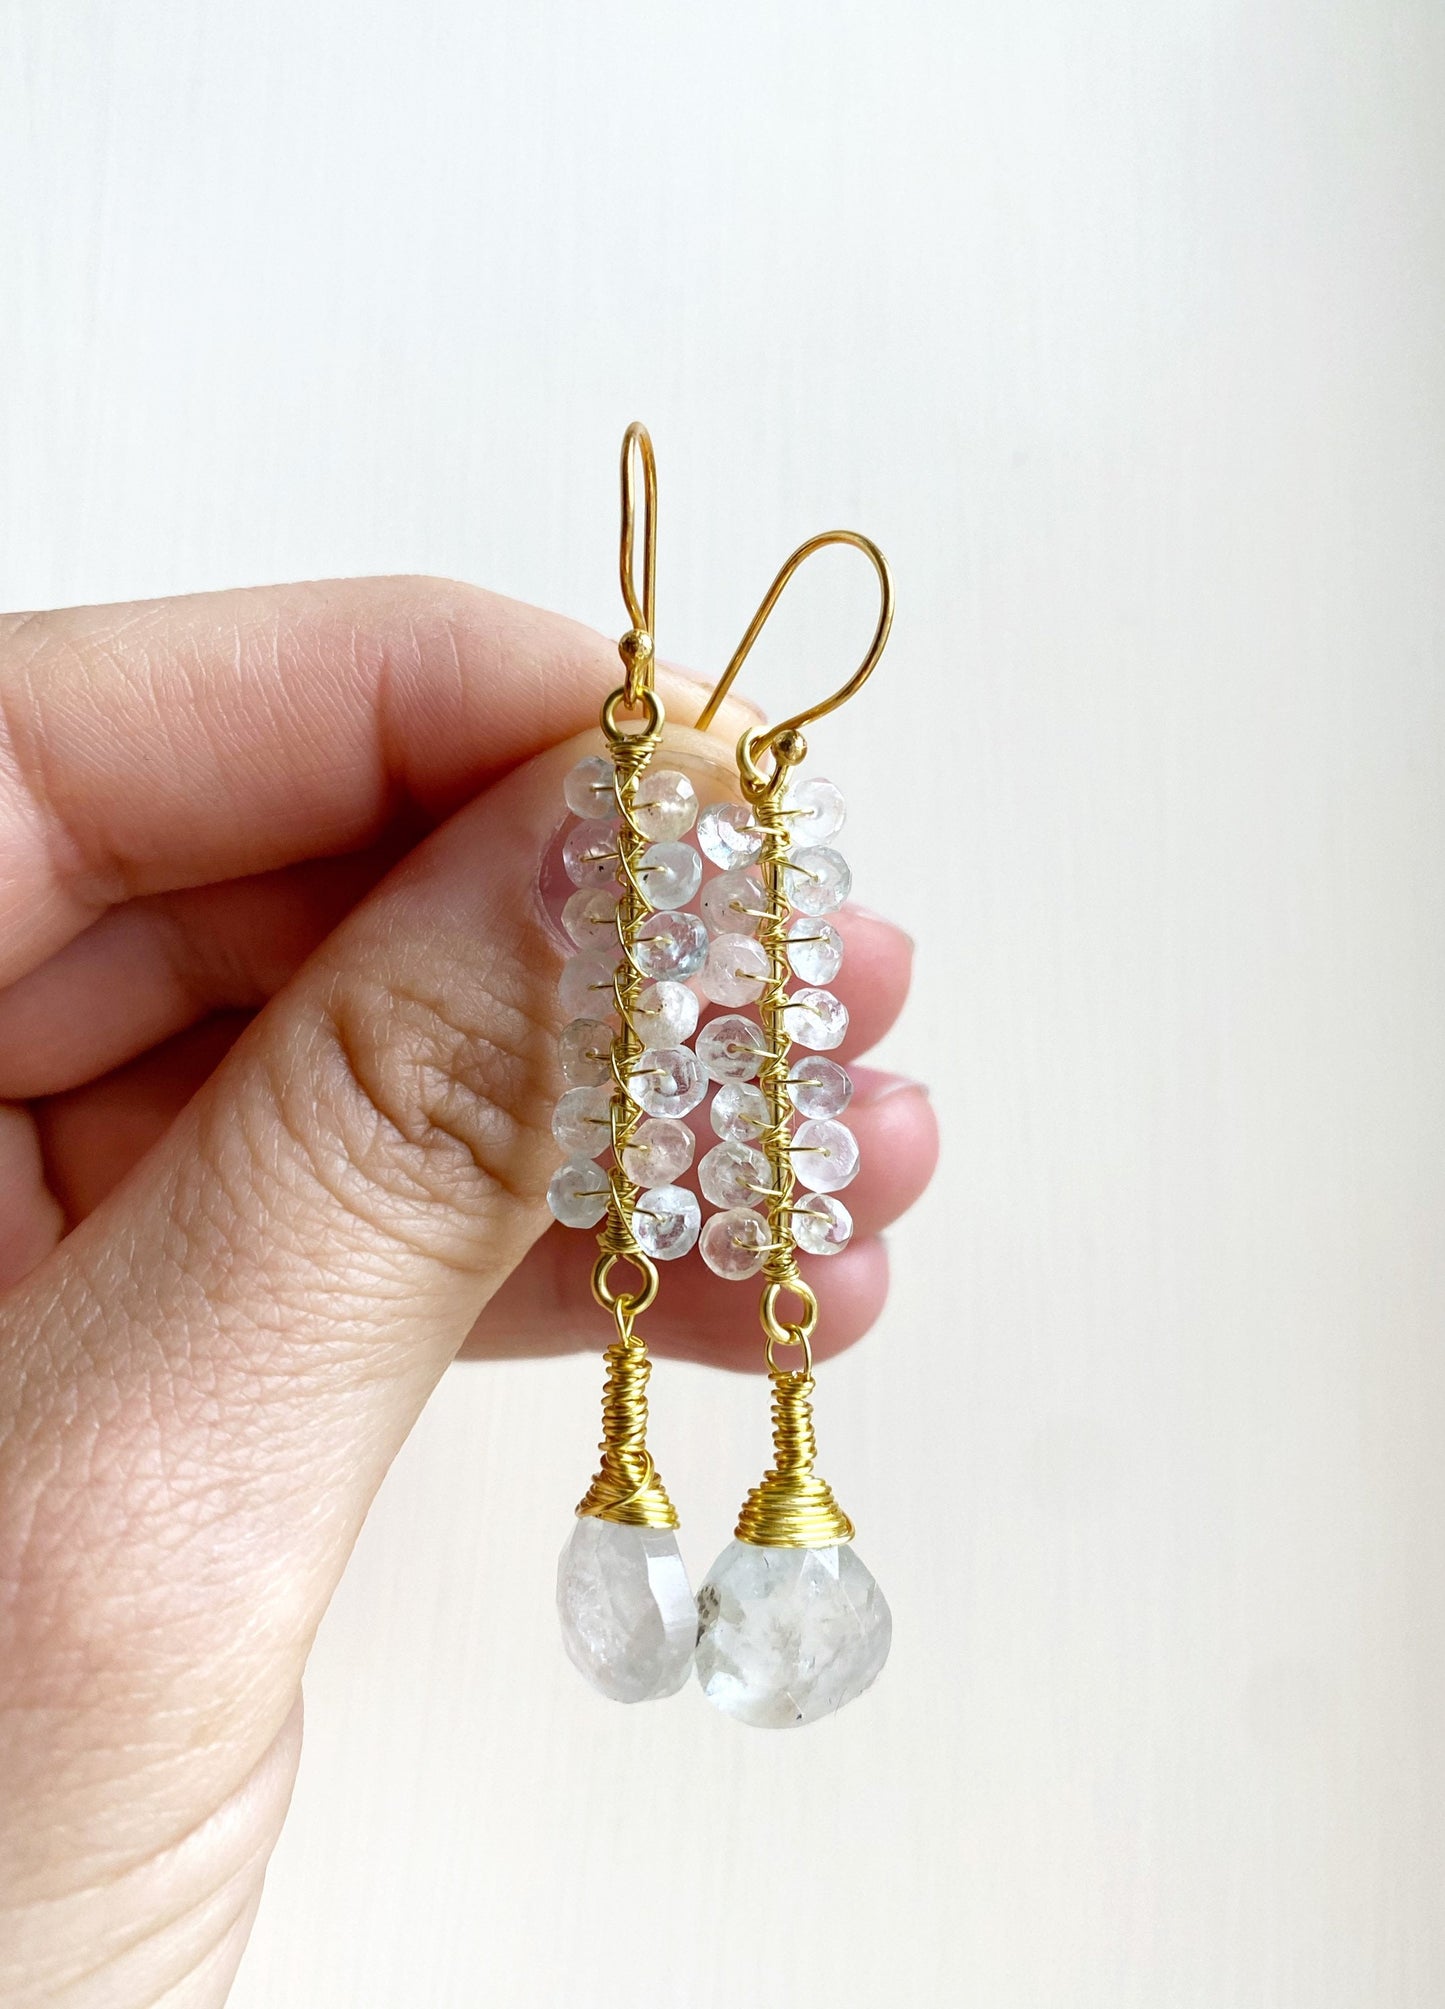 Beryl crystal earrings with aquamarine and morganite